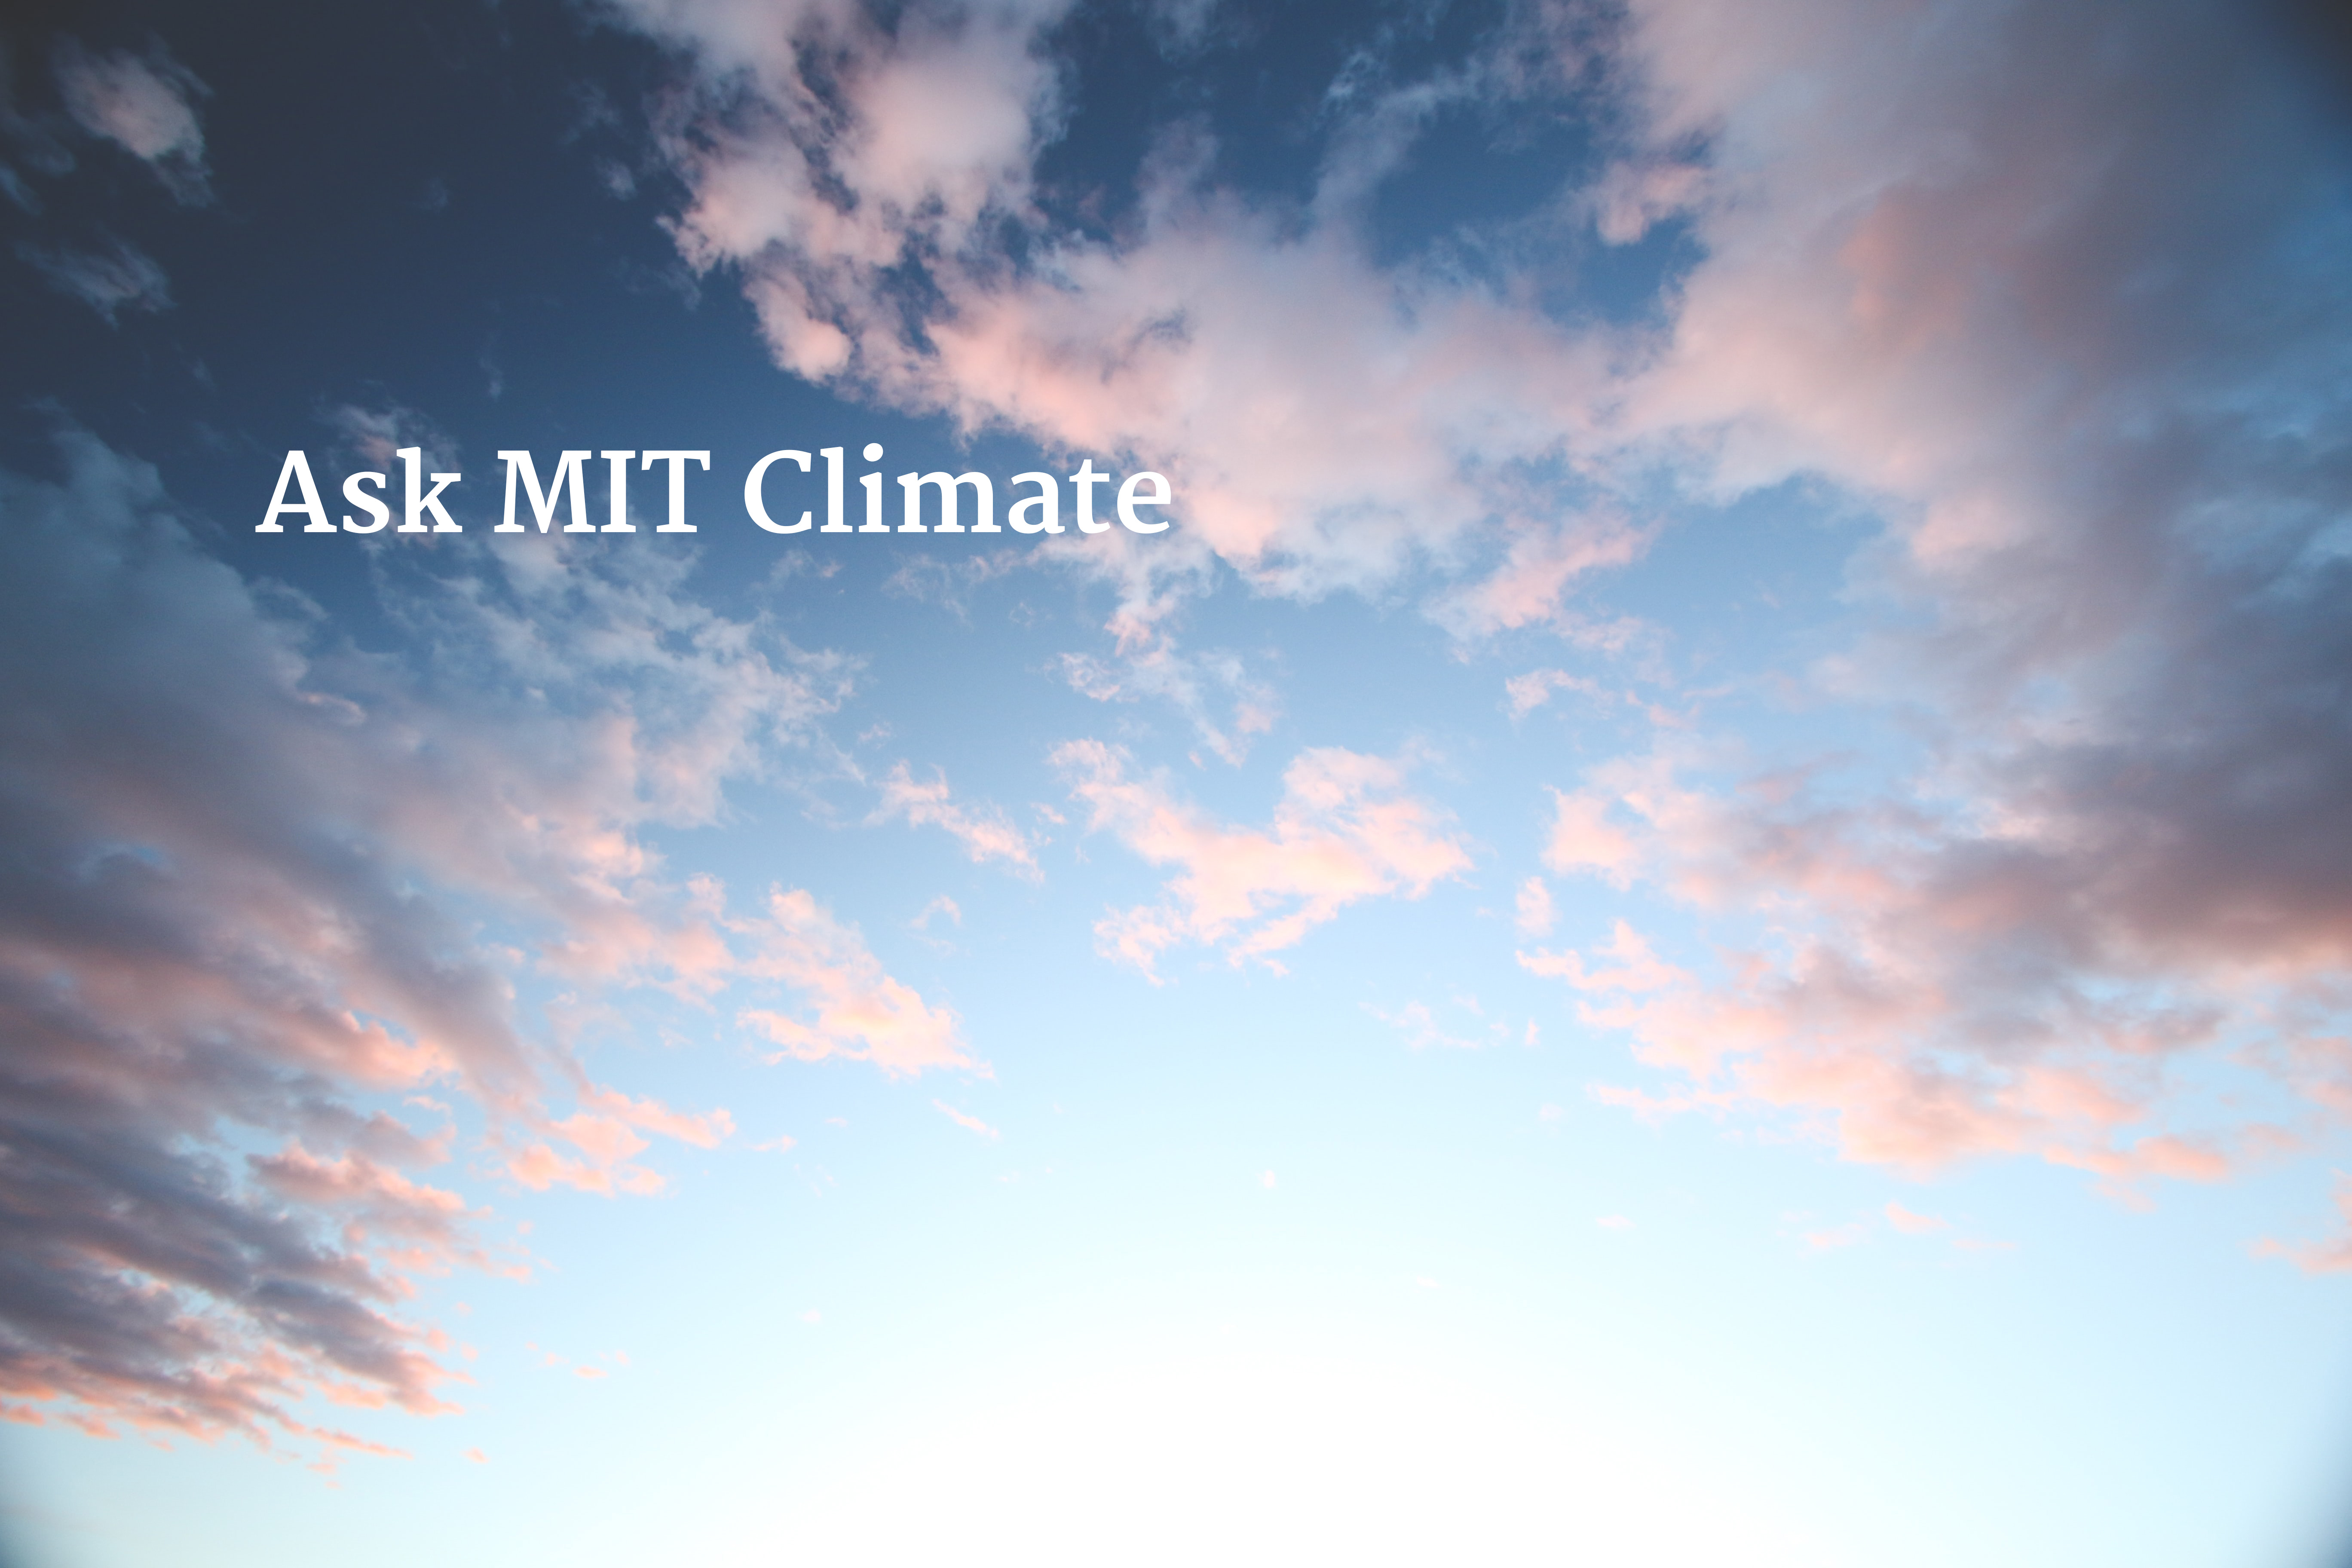 climate.mit.edu